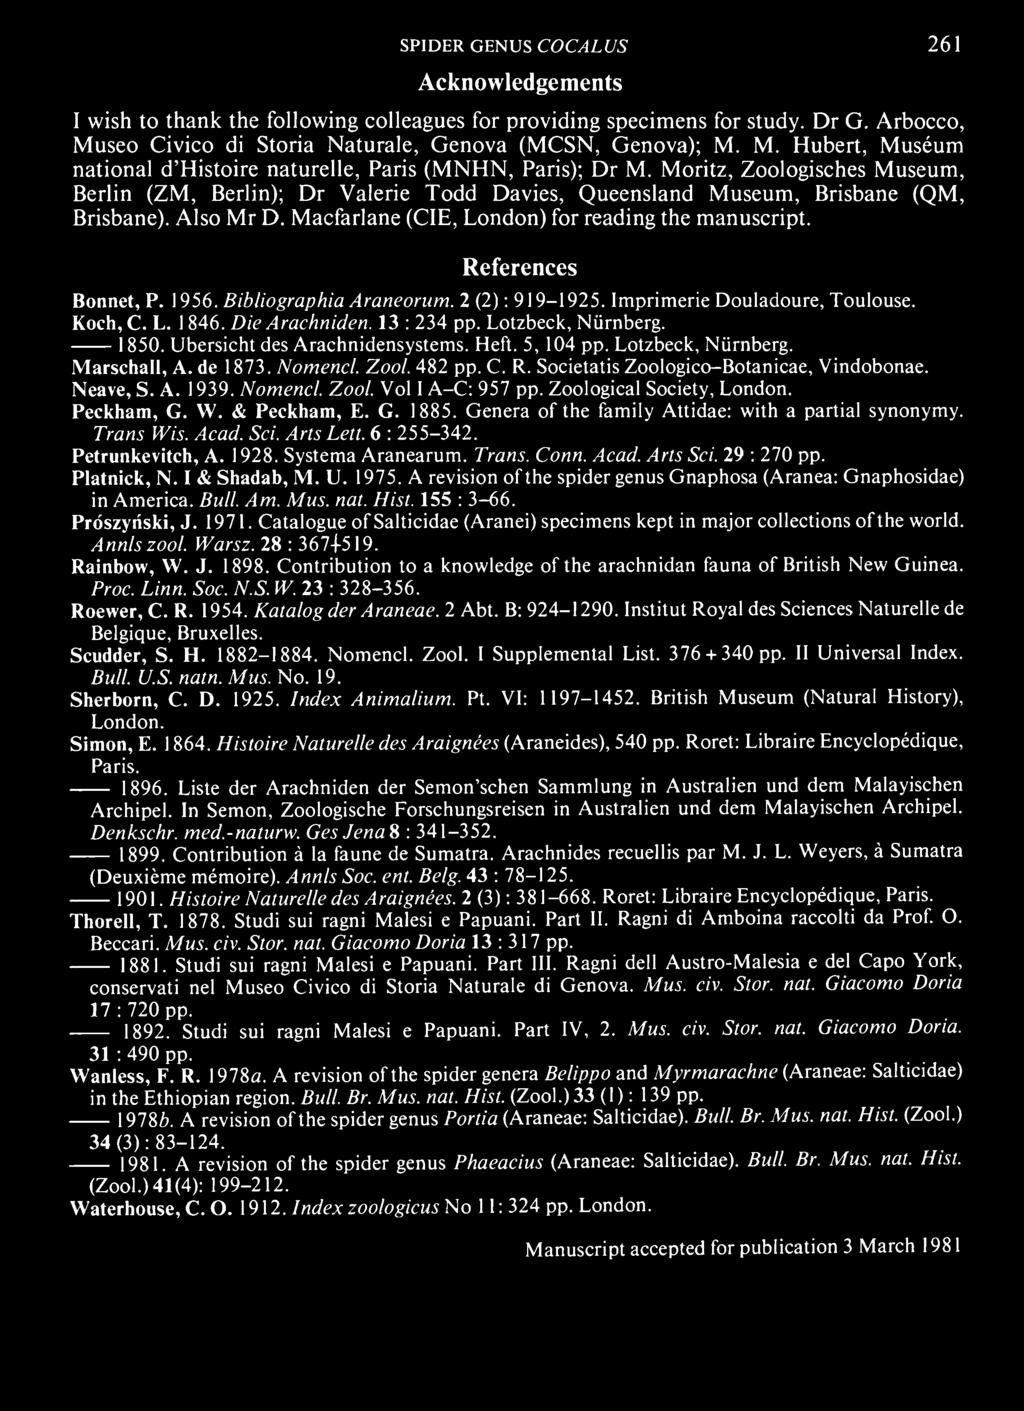 Ubersicht des Arachnidensystems. Heft. 5, 104 pp. Lotzbeck, Niirnberg. Marschall, A. de 1873. Nomencl. Zool. 482 pp. C. R. Societatis Zoologico-Botanicae, Vindobonae. Neave, S. A. 1939. Nomencl. Zool. Vol I A-C: 957 pp.